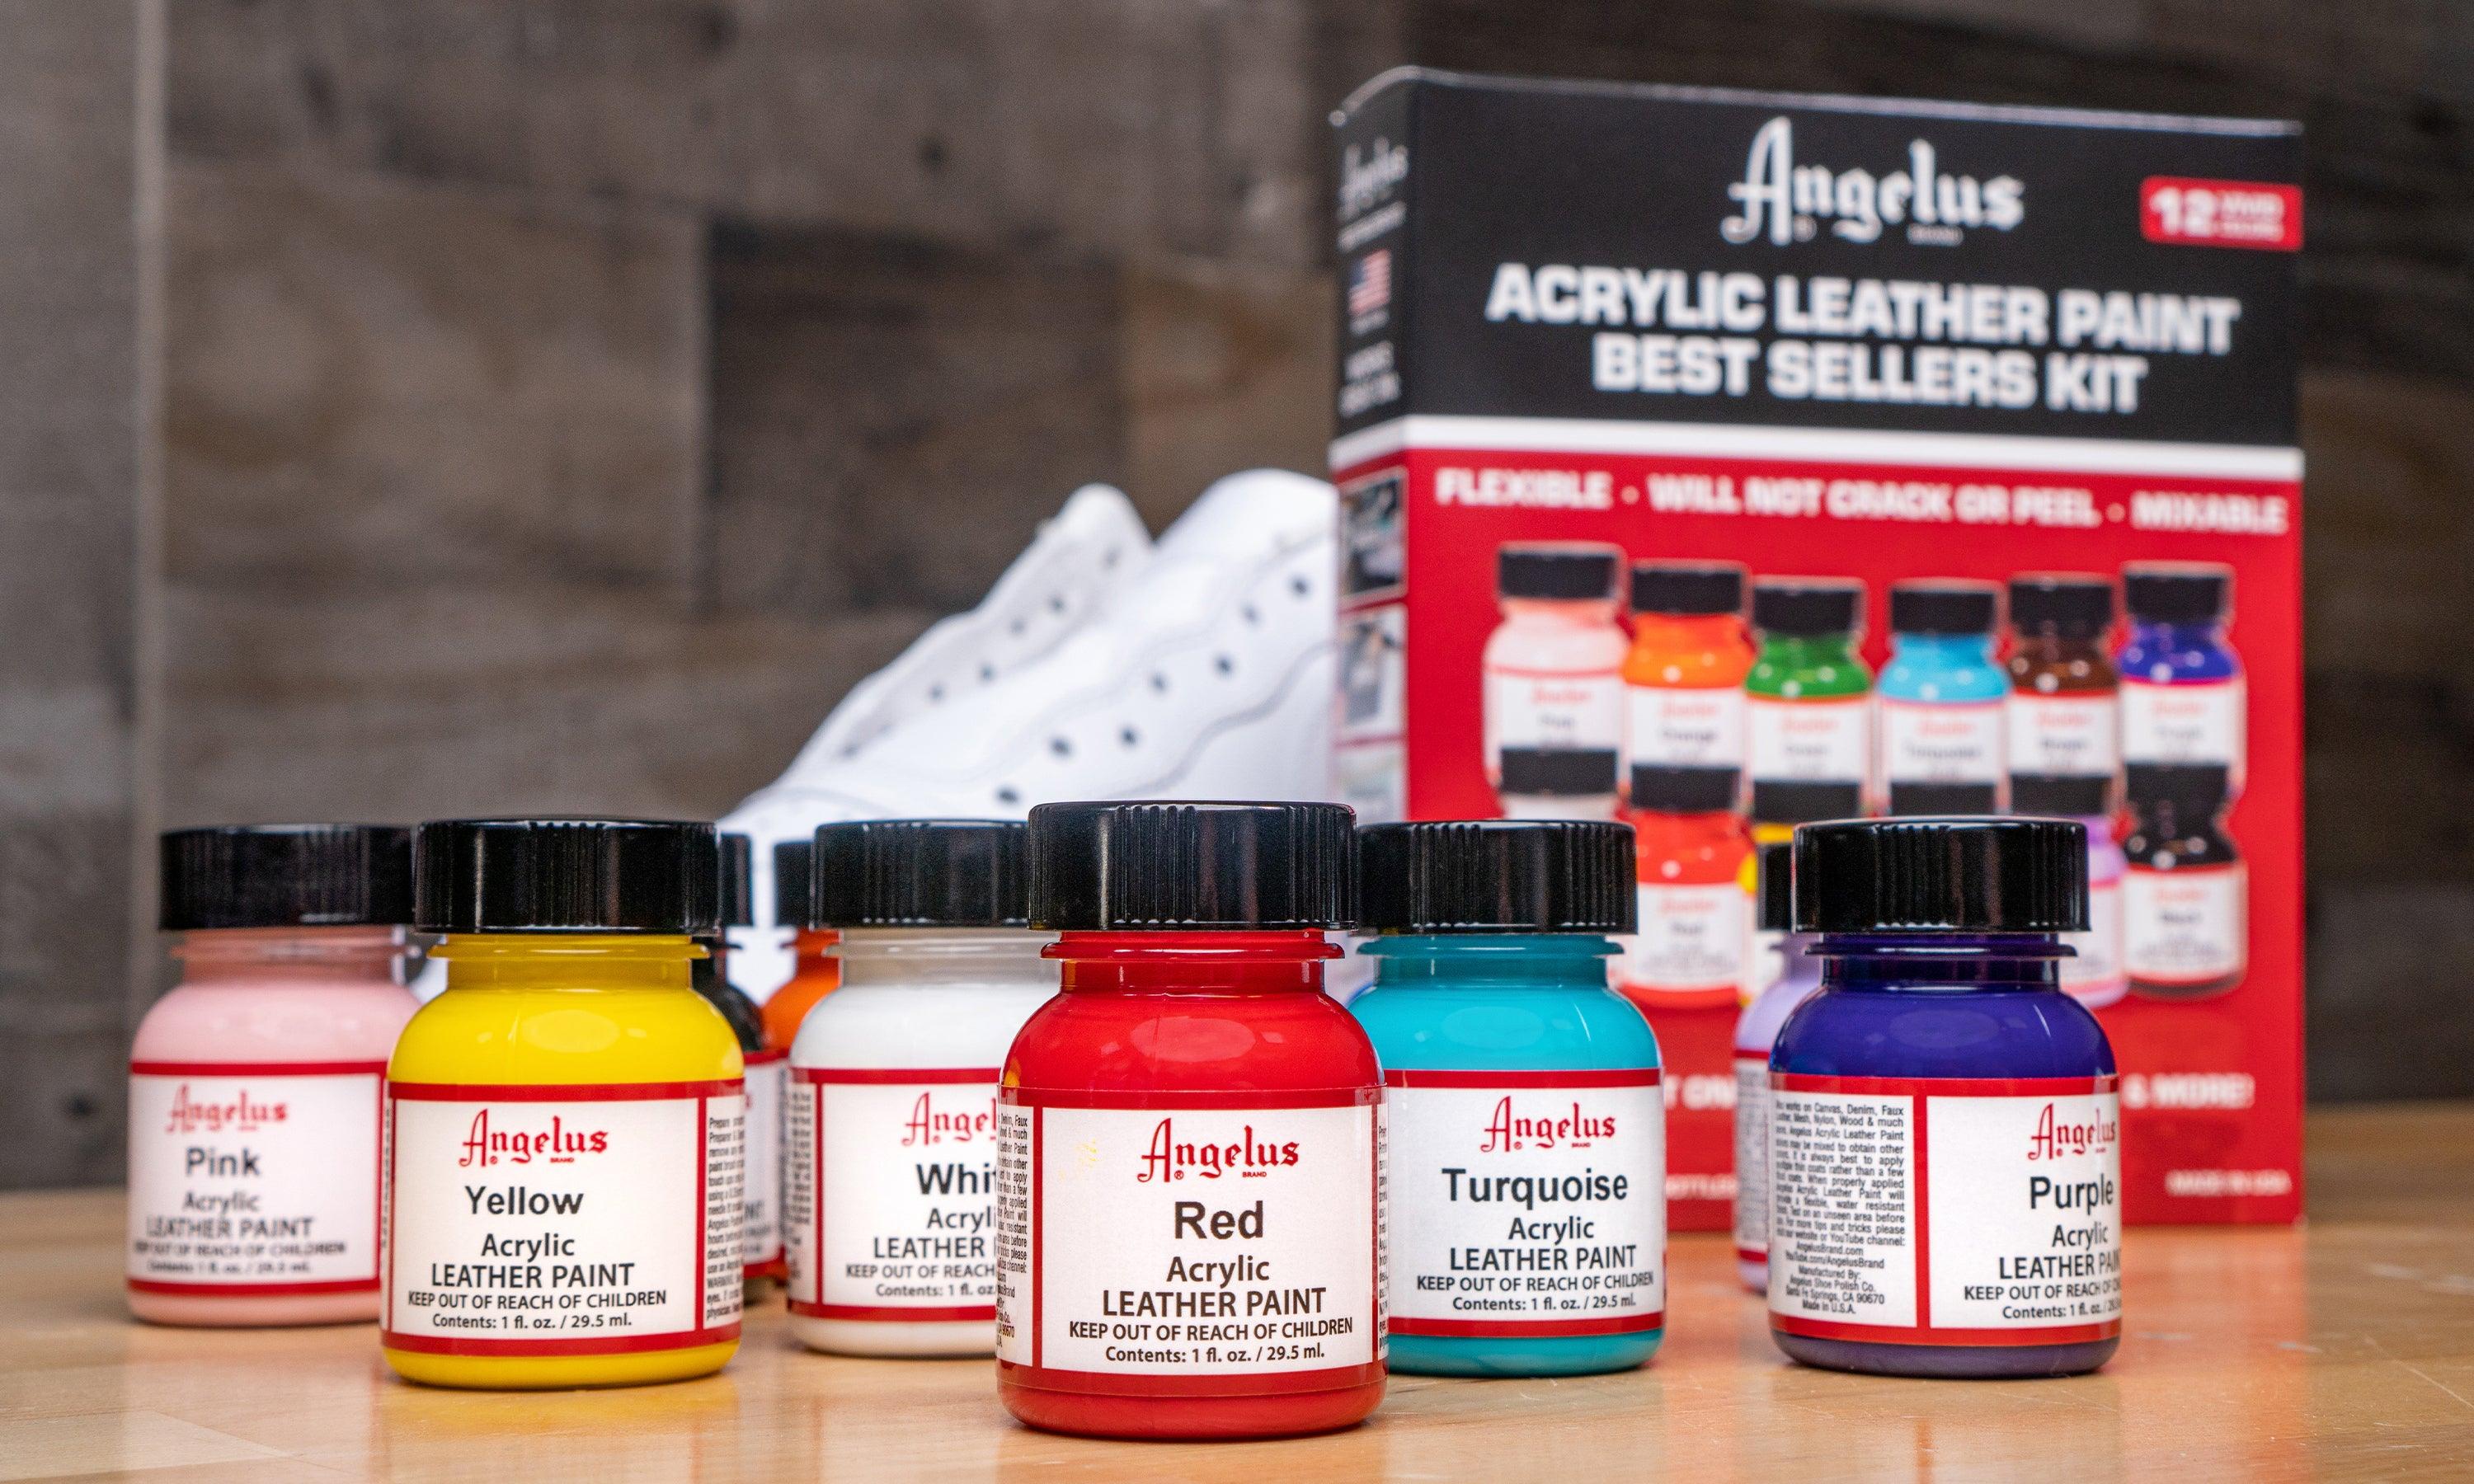 Angelus Acrylic Leather Paint Best Sellers Kit